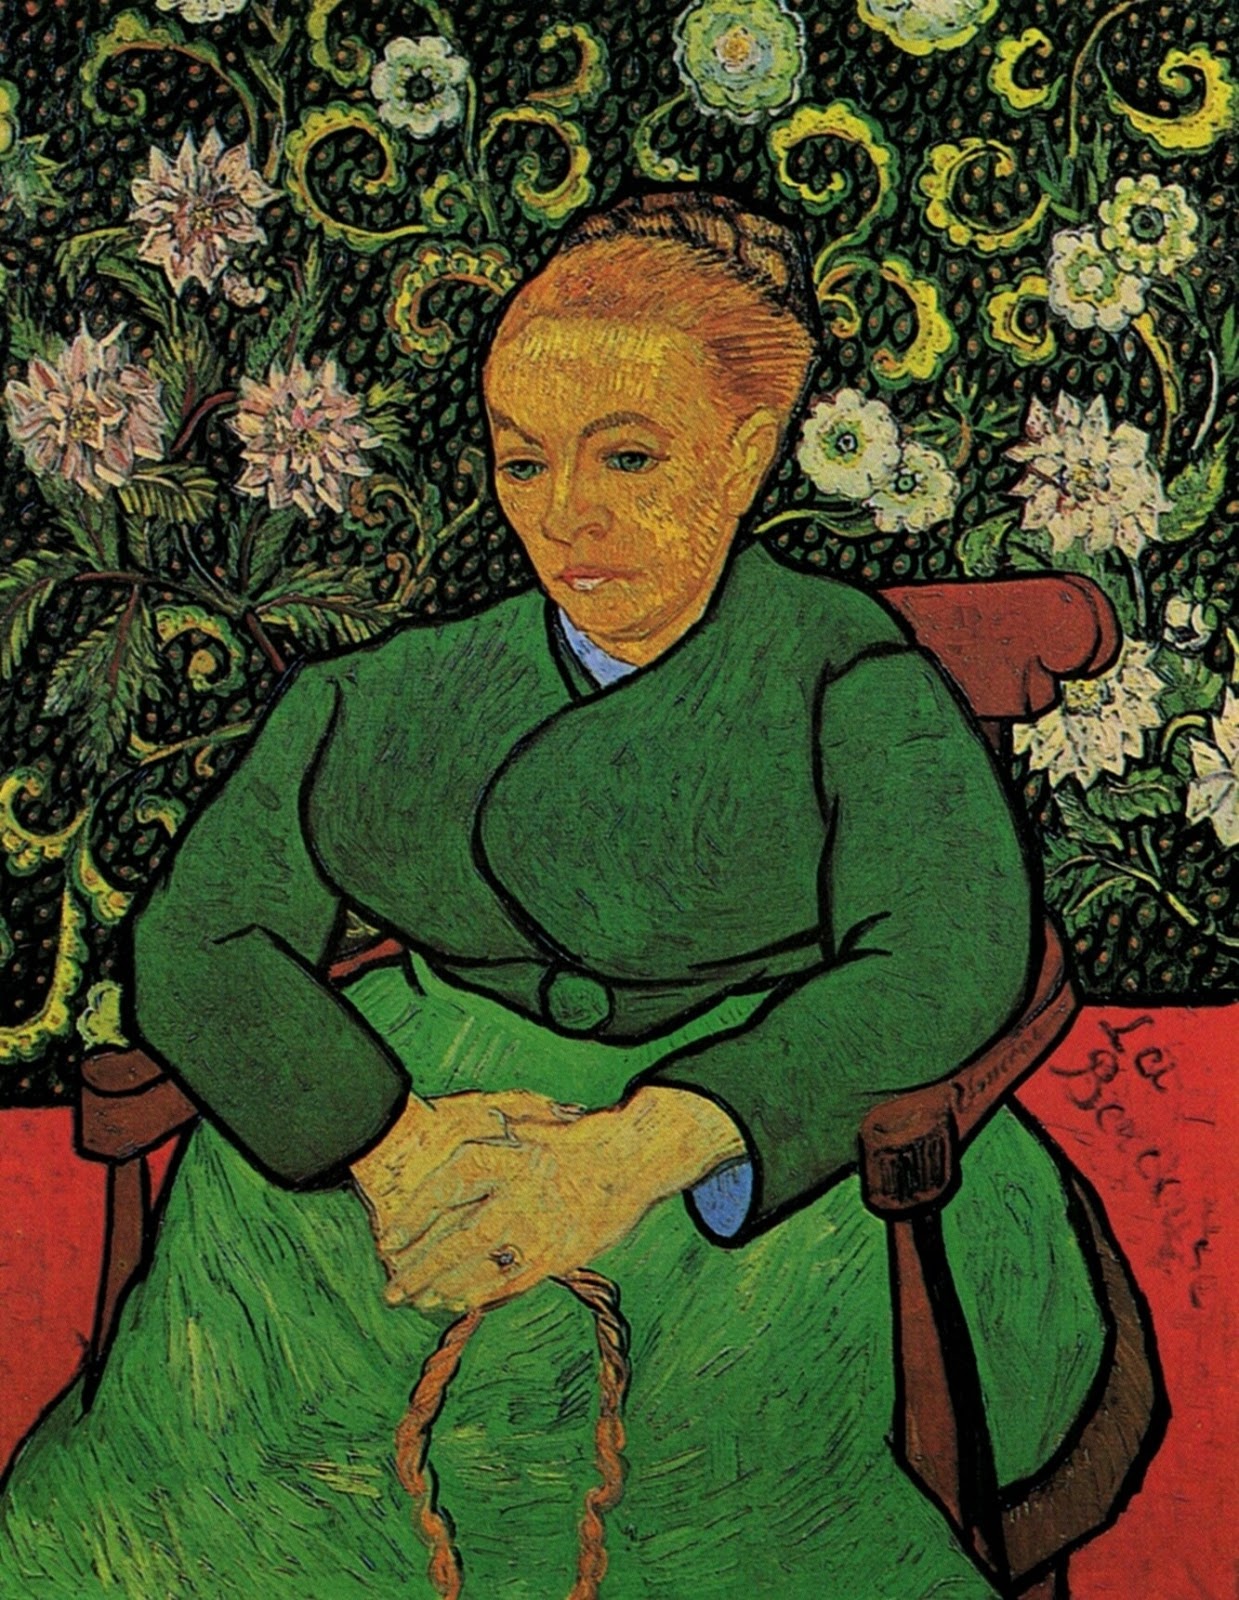 Vincent+Van+Gogh-1853-1890 (484).jpg